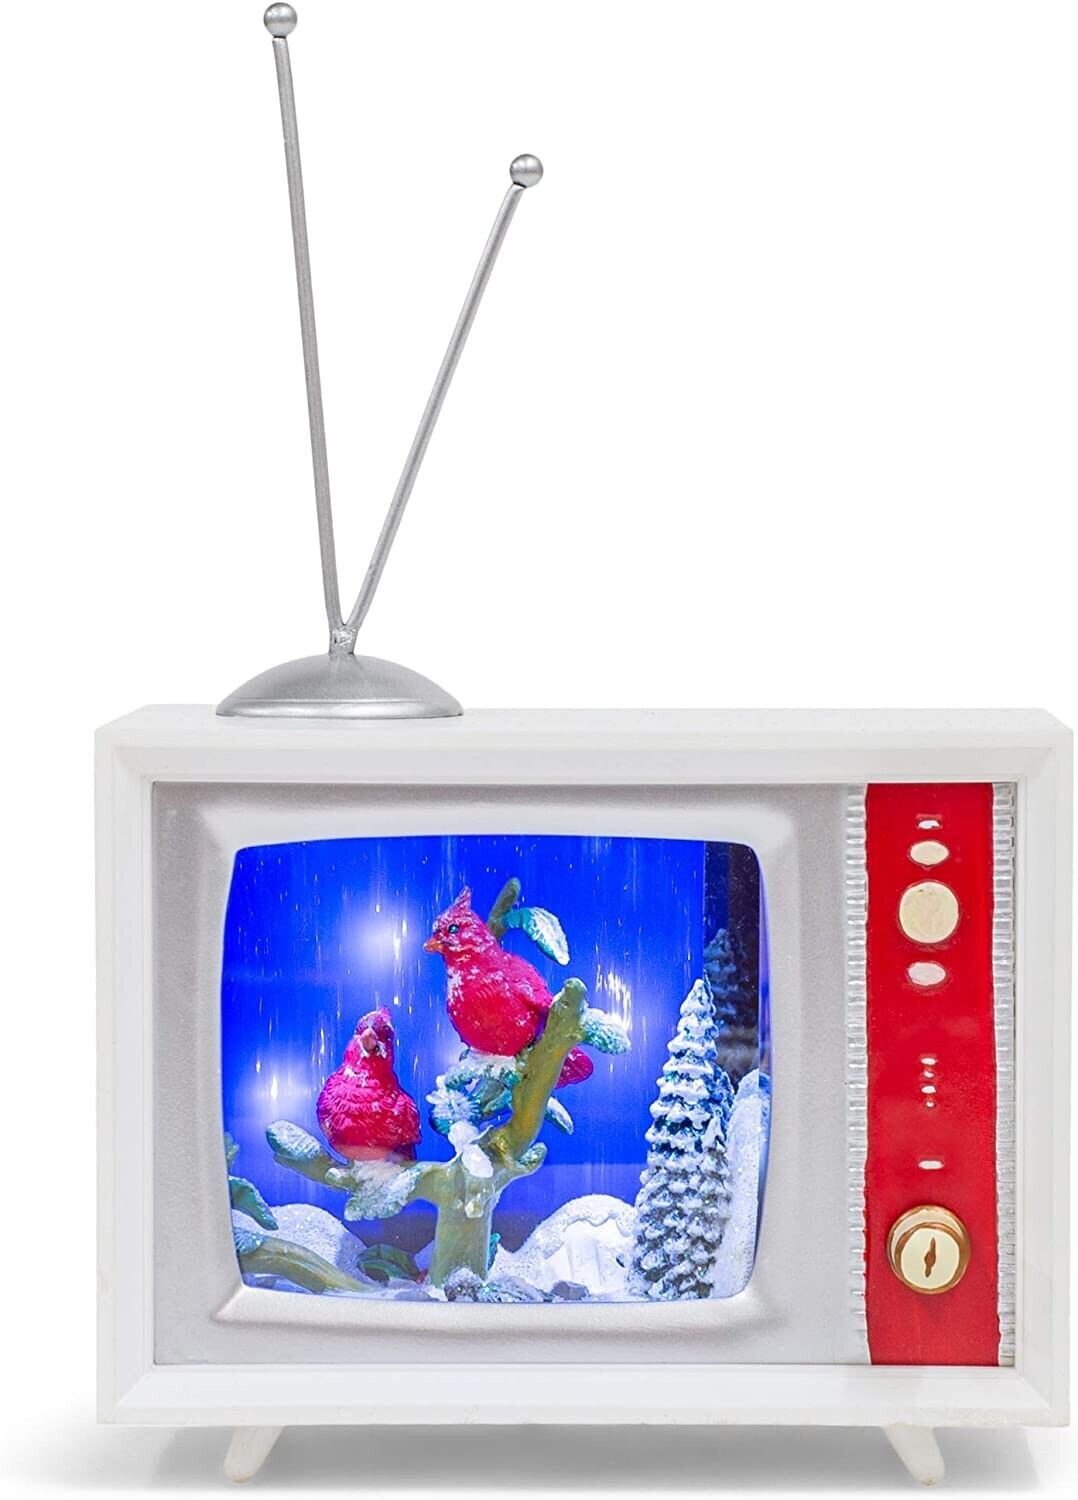 Led White TV with Cardinal Snowfall Musical Box Figurine, 4.75 inch